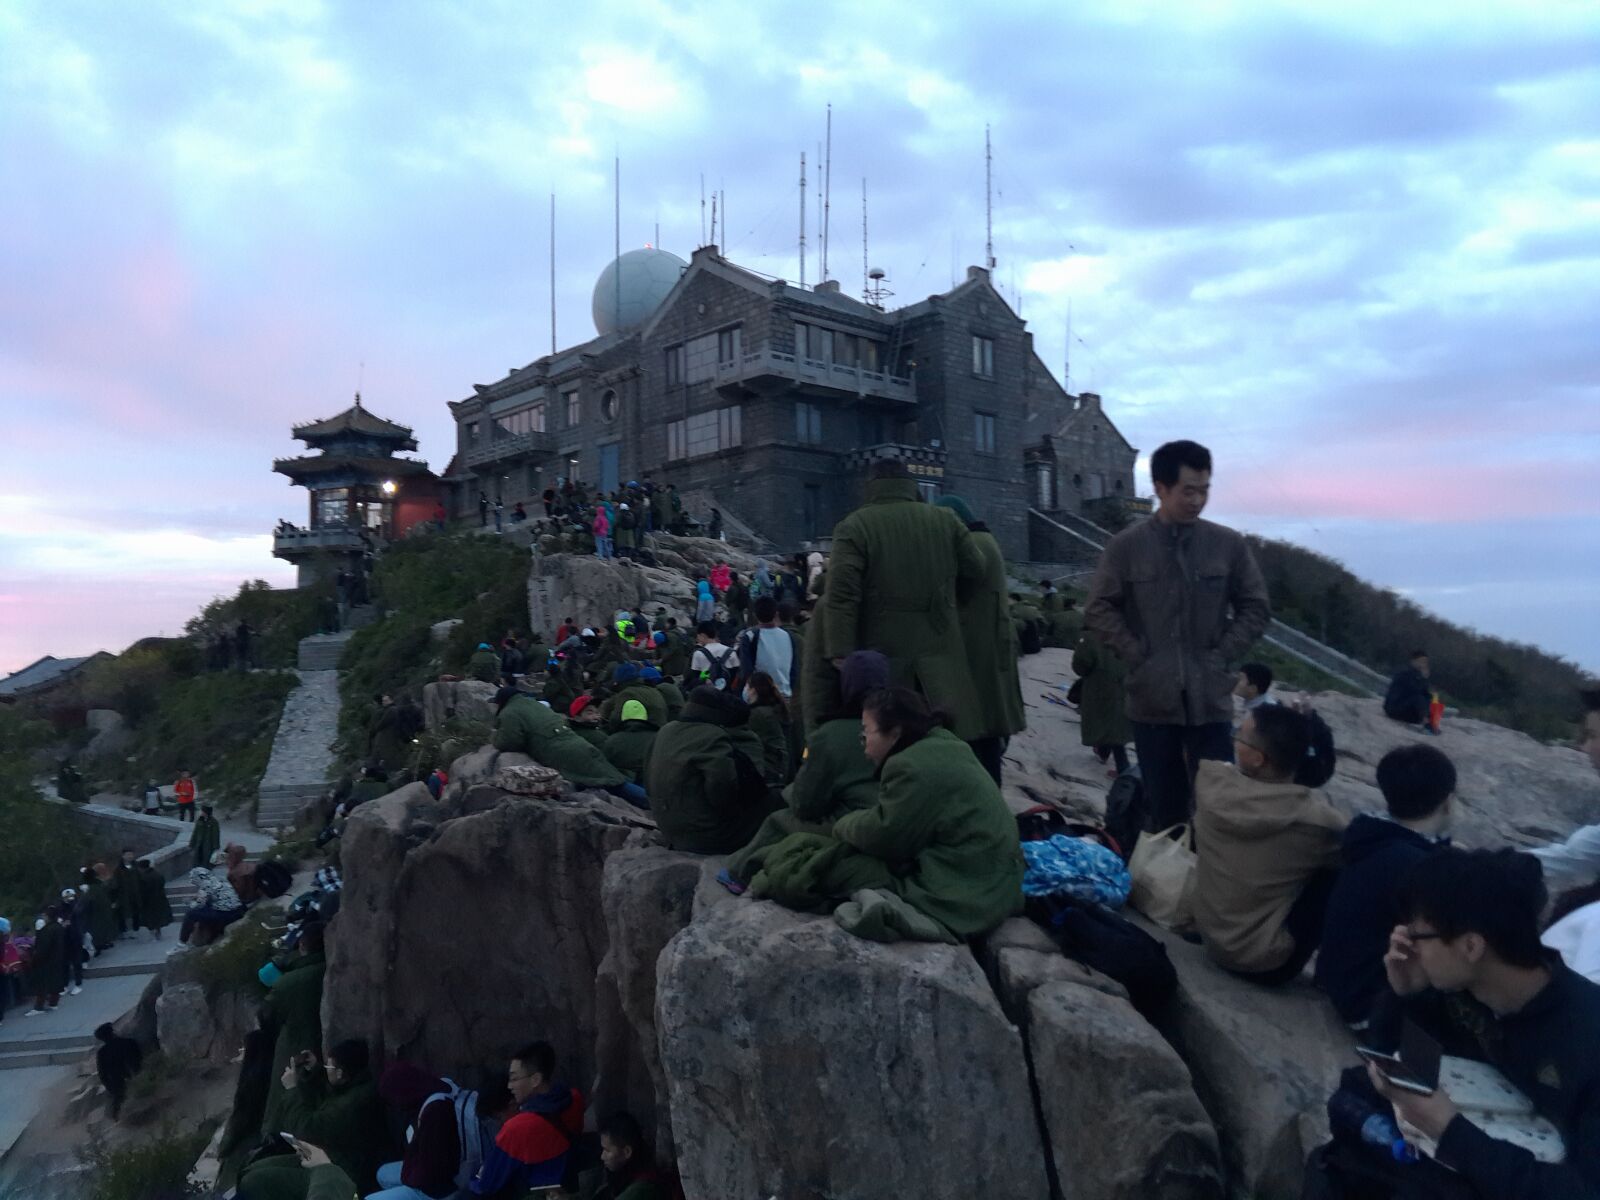 Meizu MX4 Pro sample photo. Taishan mountain, sunrise, poetry photography